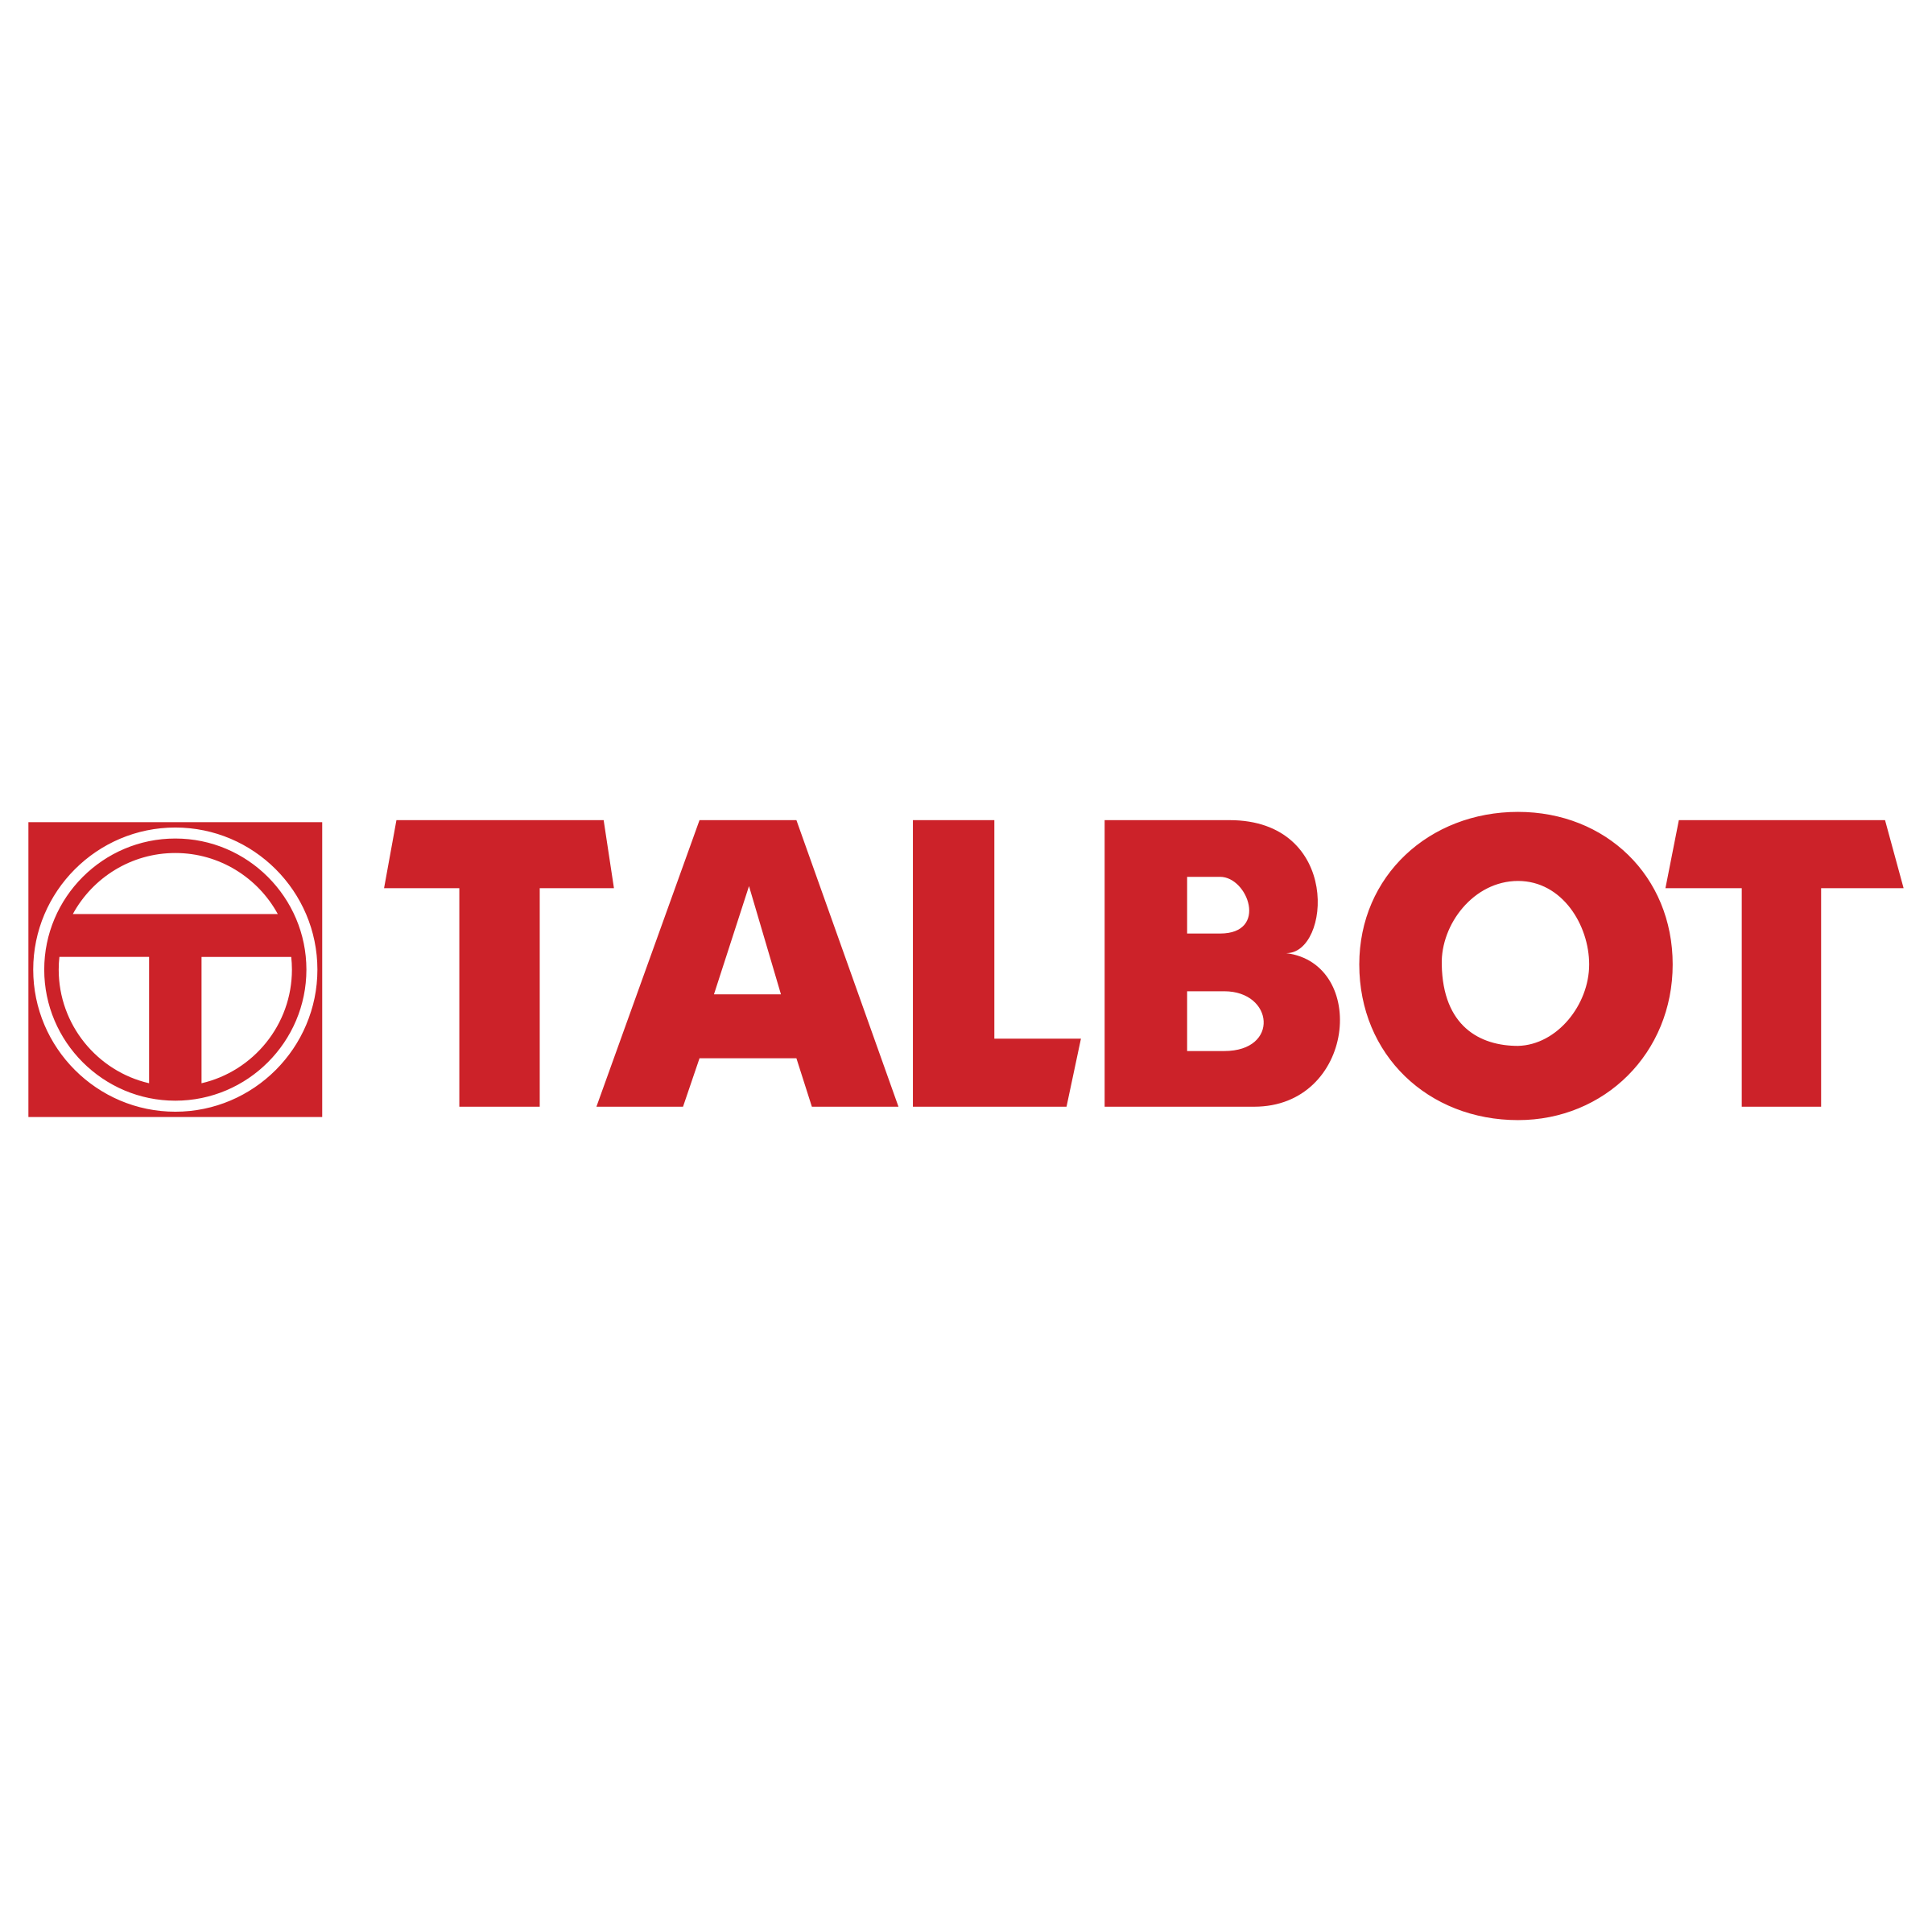 Talbot Logo - Talbot Logo PNG Transparent & SVG Vector - Freebie Supply